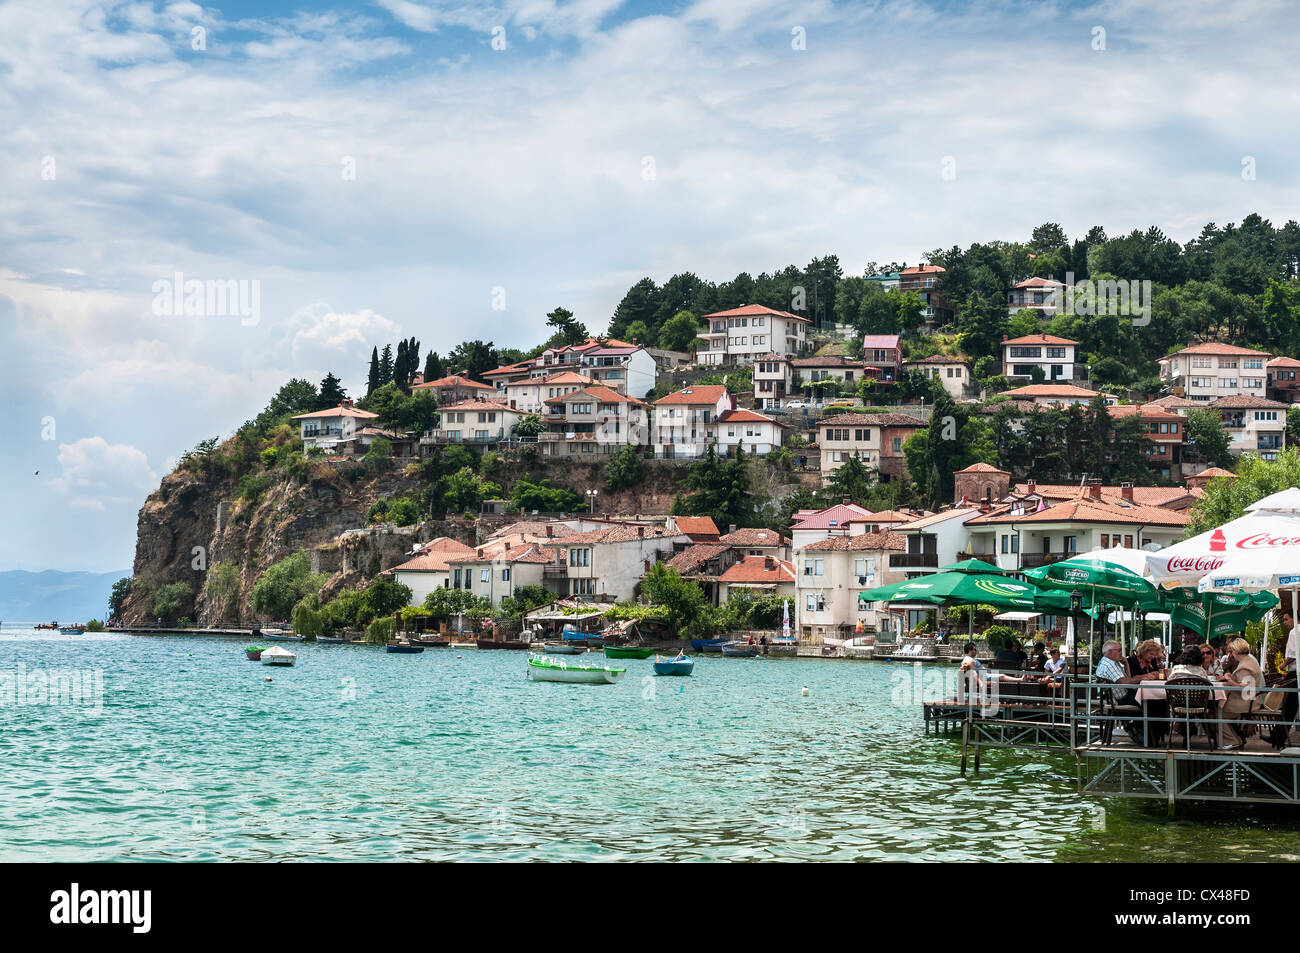 The town of Ohrid, UNESCO World Heritage Site, on Lake Ohrid, Macedonia, FYROM, Former Yugoslav Republic of Macedonia. Stock Photo